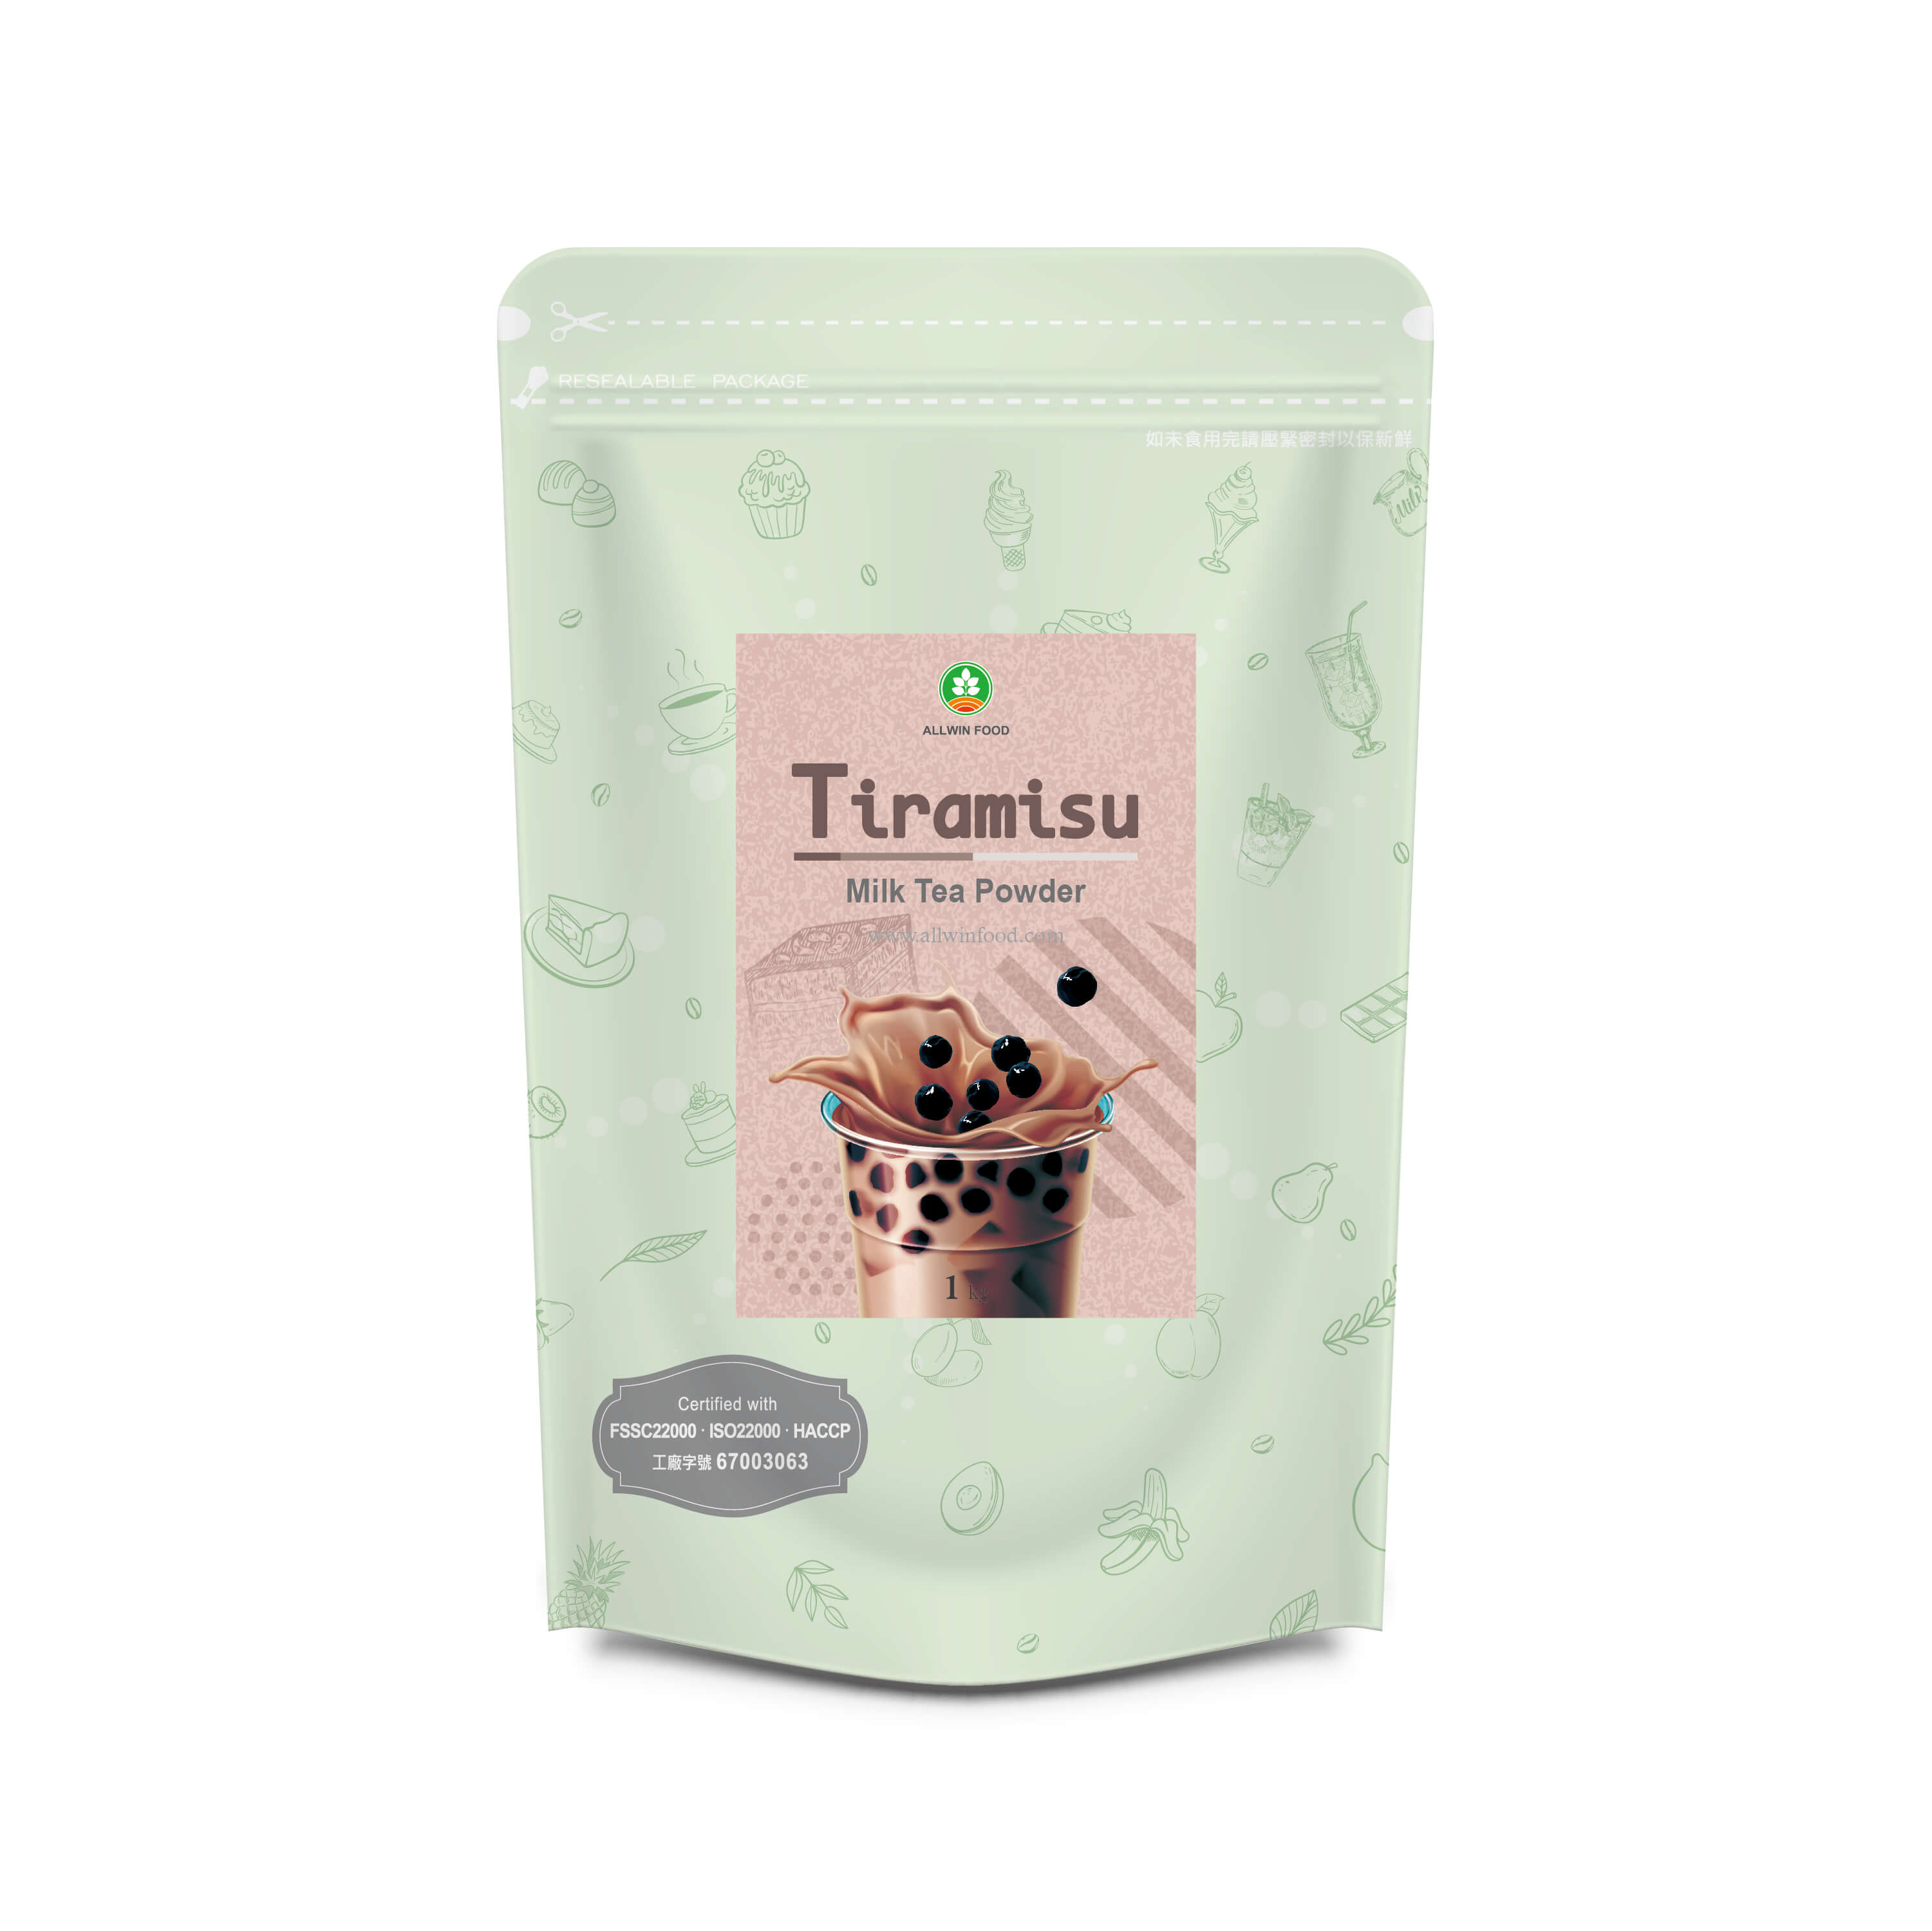 Tiramisu Milk Tea Powder Supplier